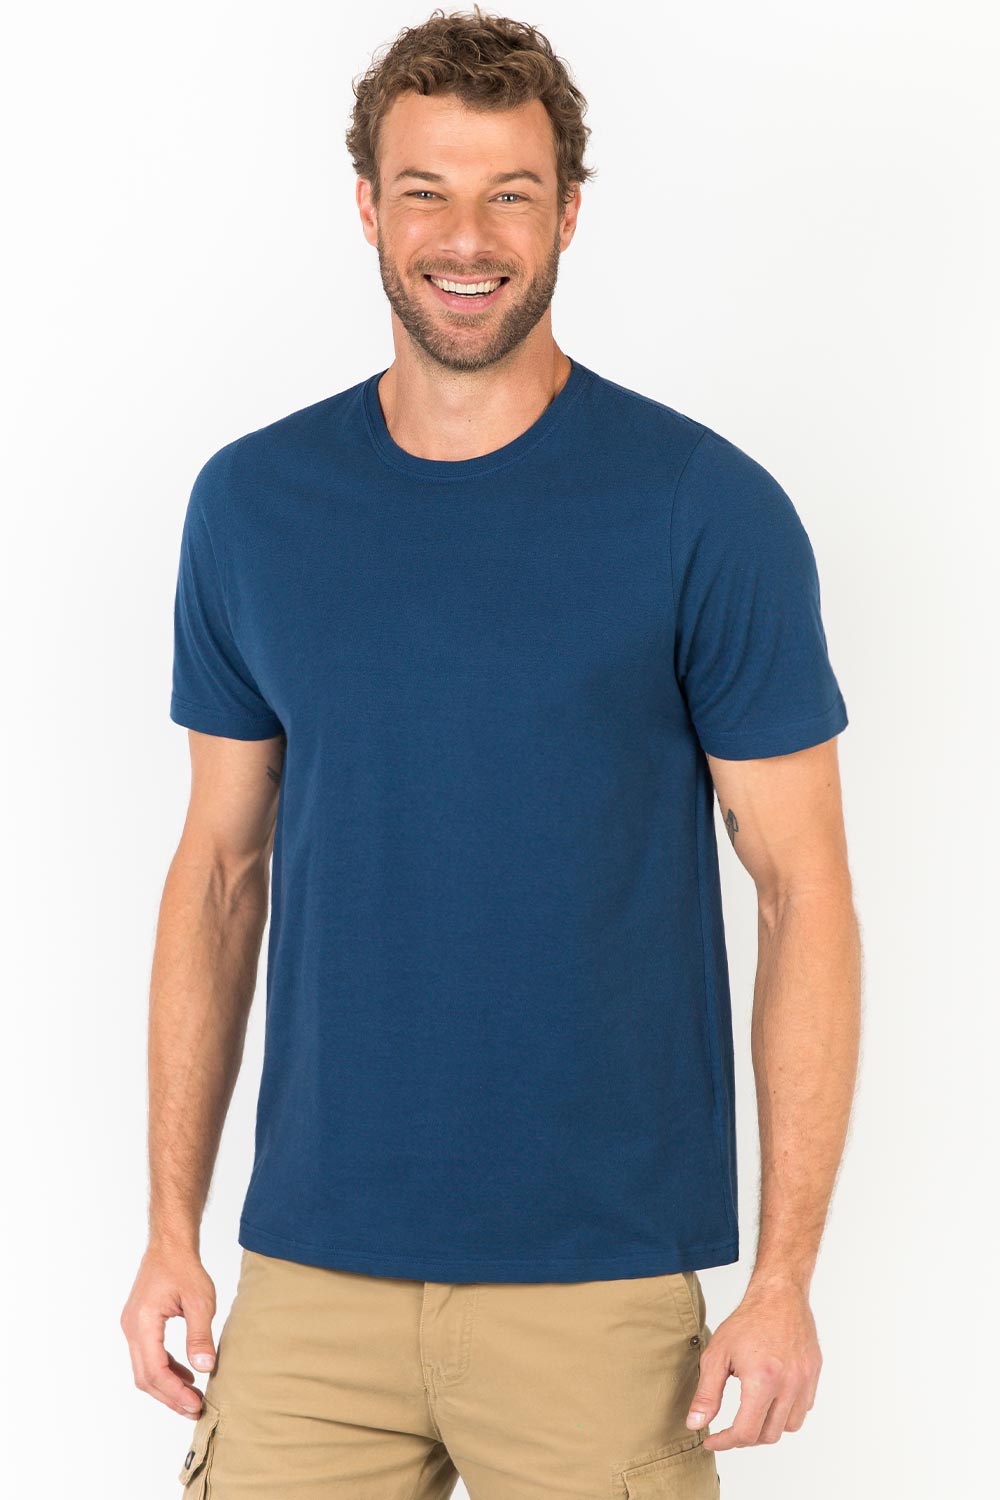 T-shirt elastano comfort Soccer - azul marinho